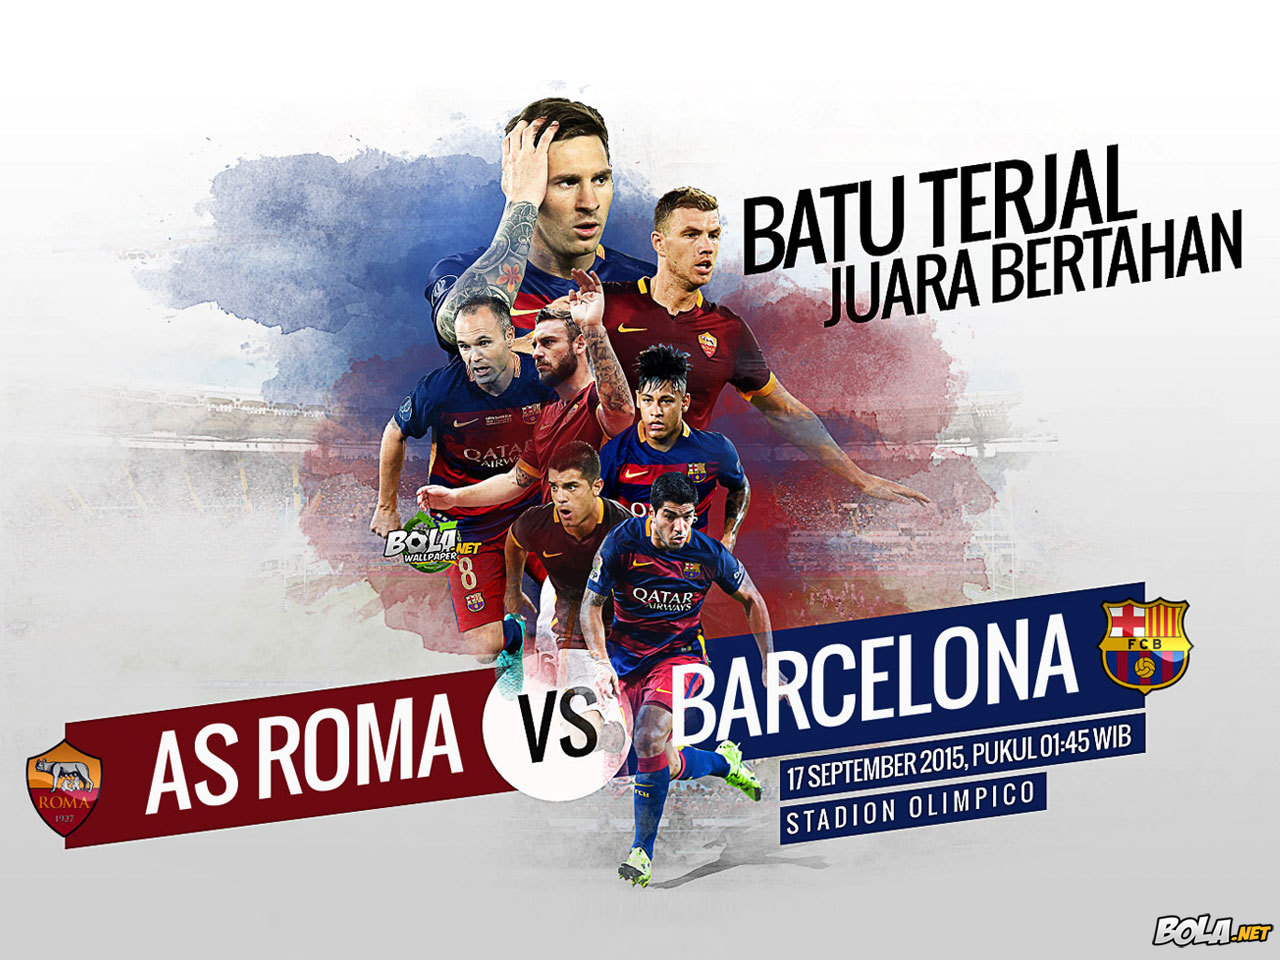 Download Wallpaper AS Roma Vs Barcelona Bolanet